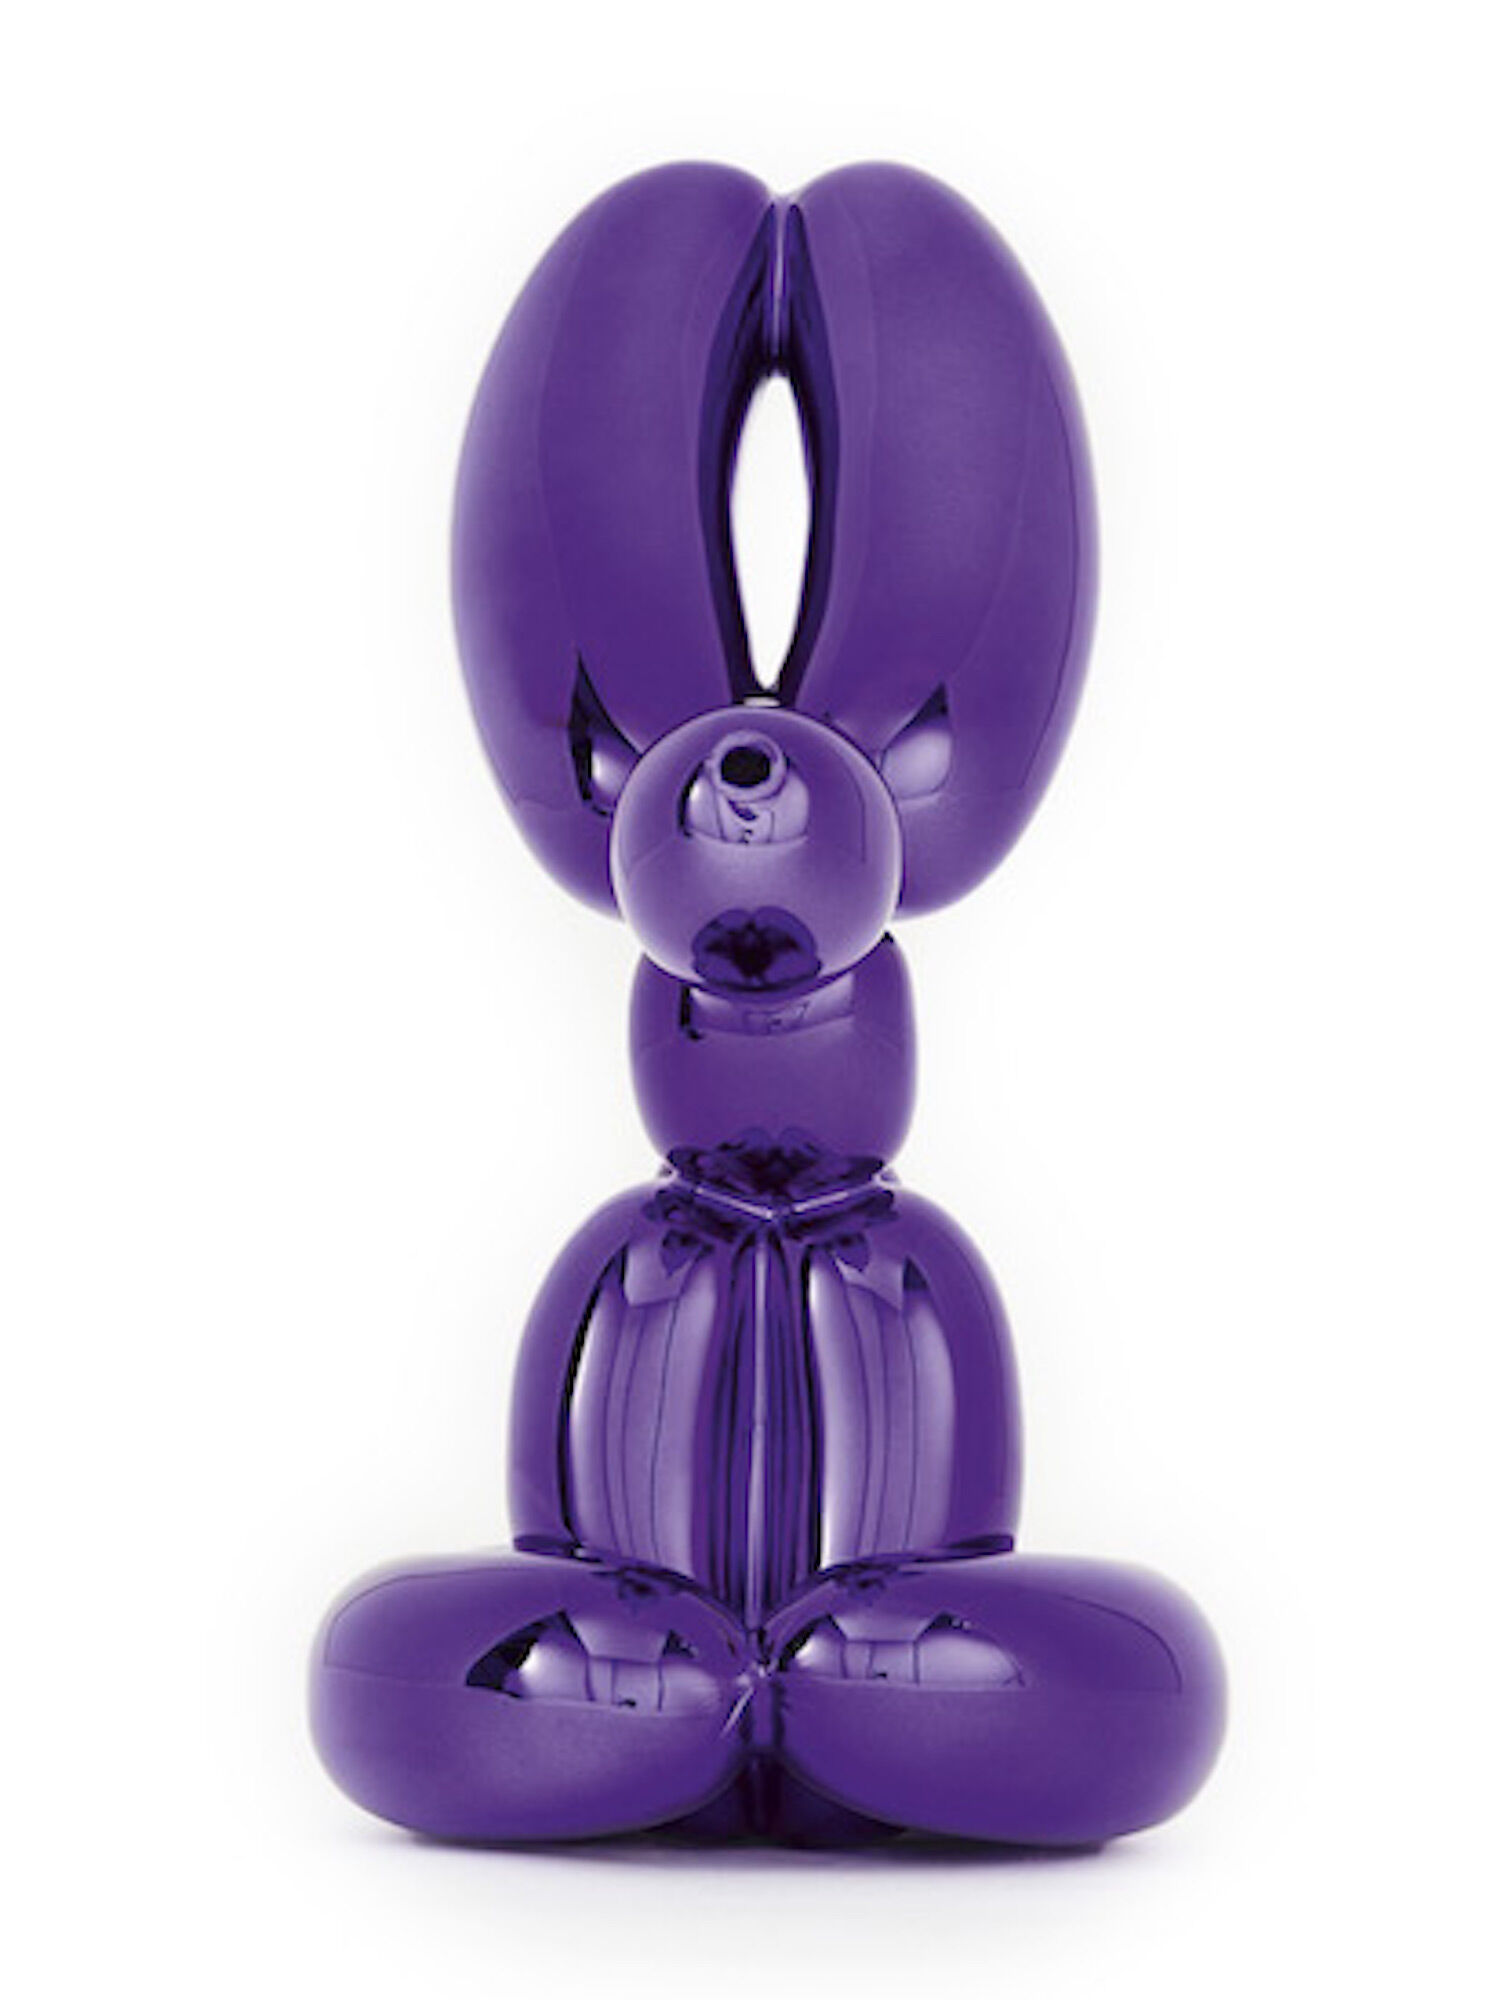 Sculpture "Balloon Rabbit (Violet)" (2019) by Jeff Koons